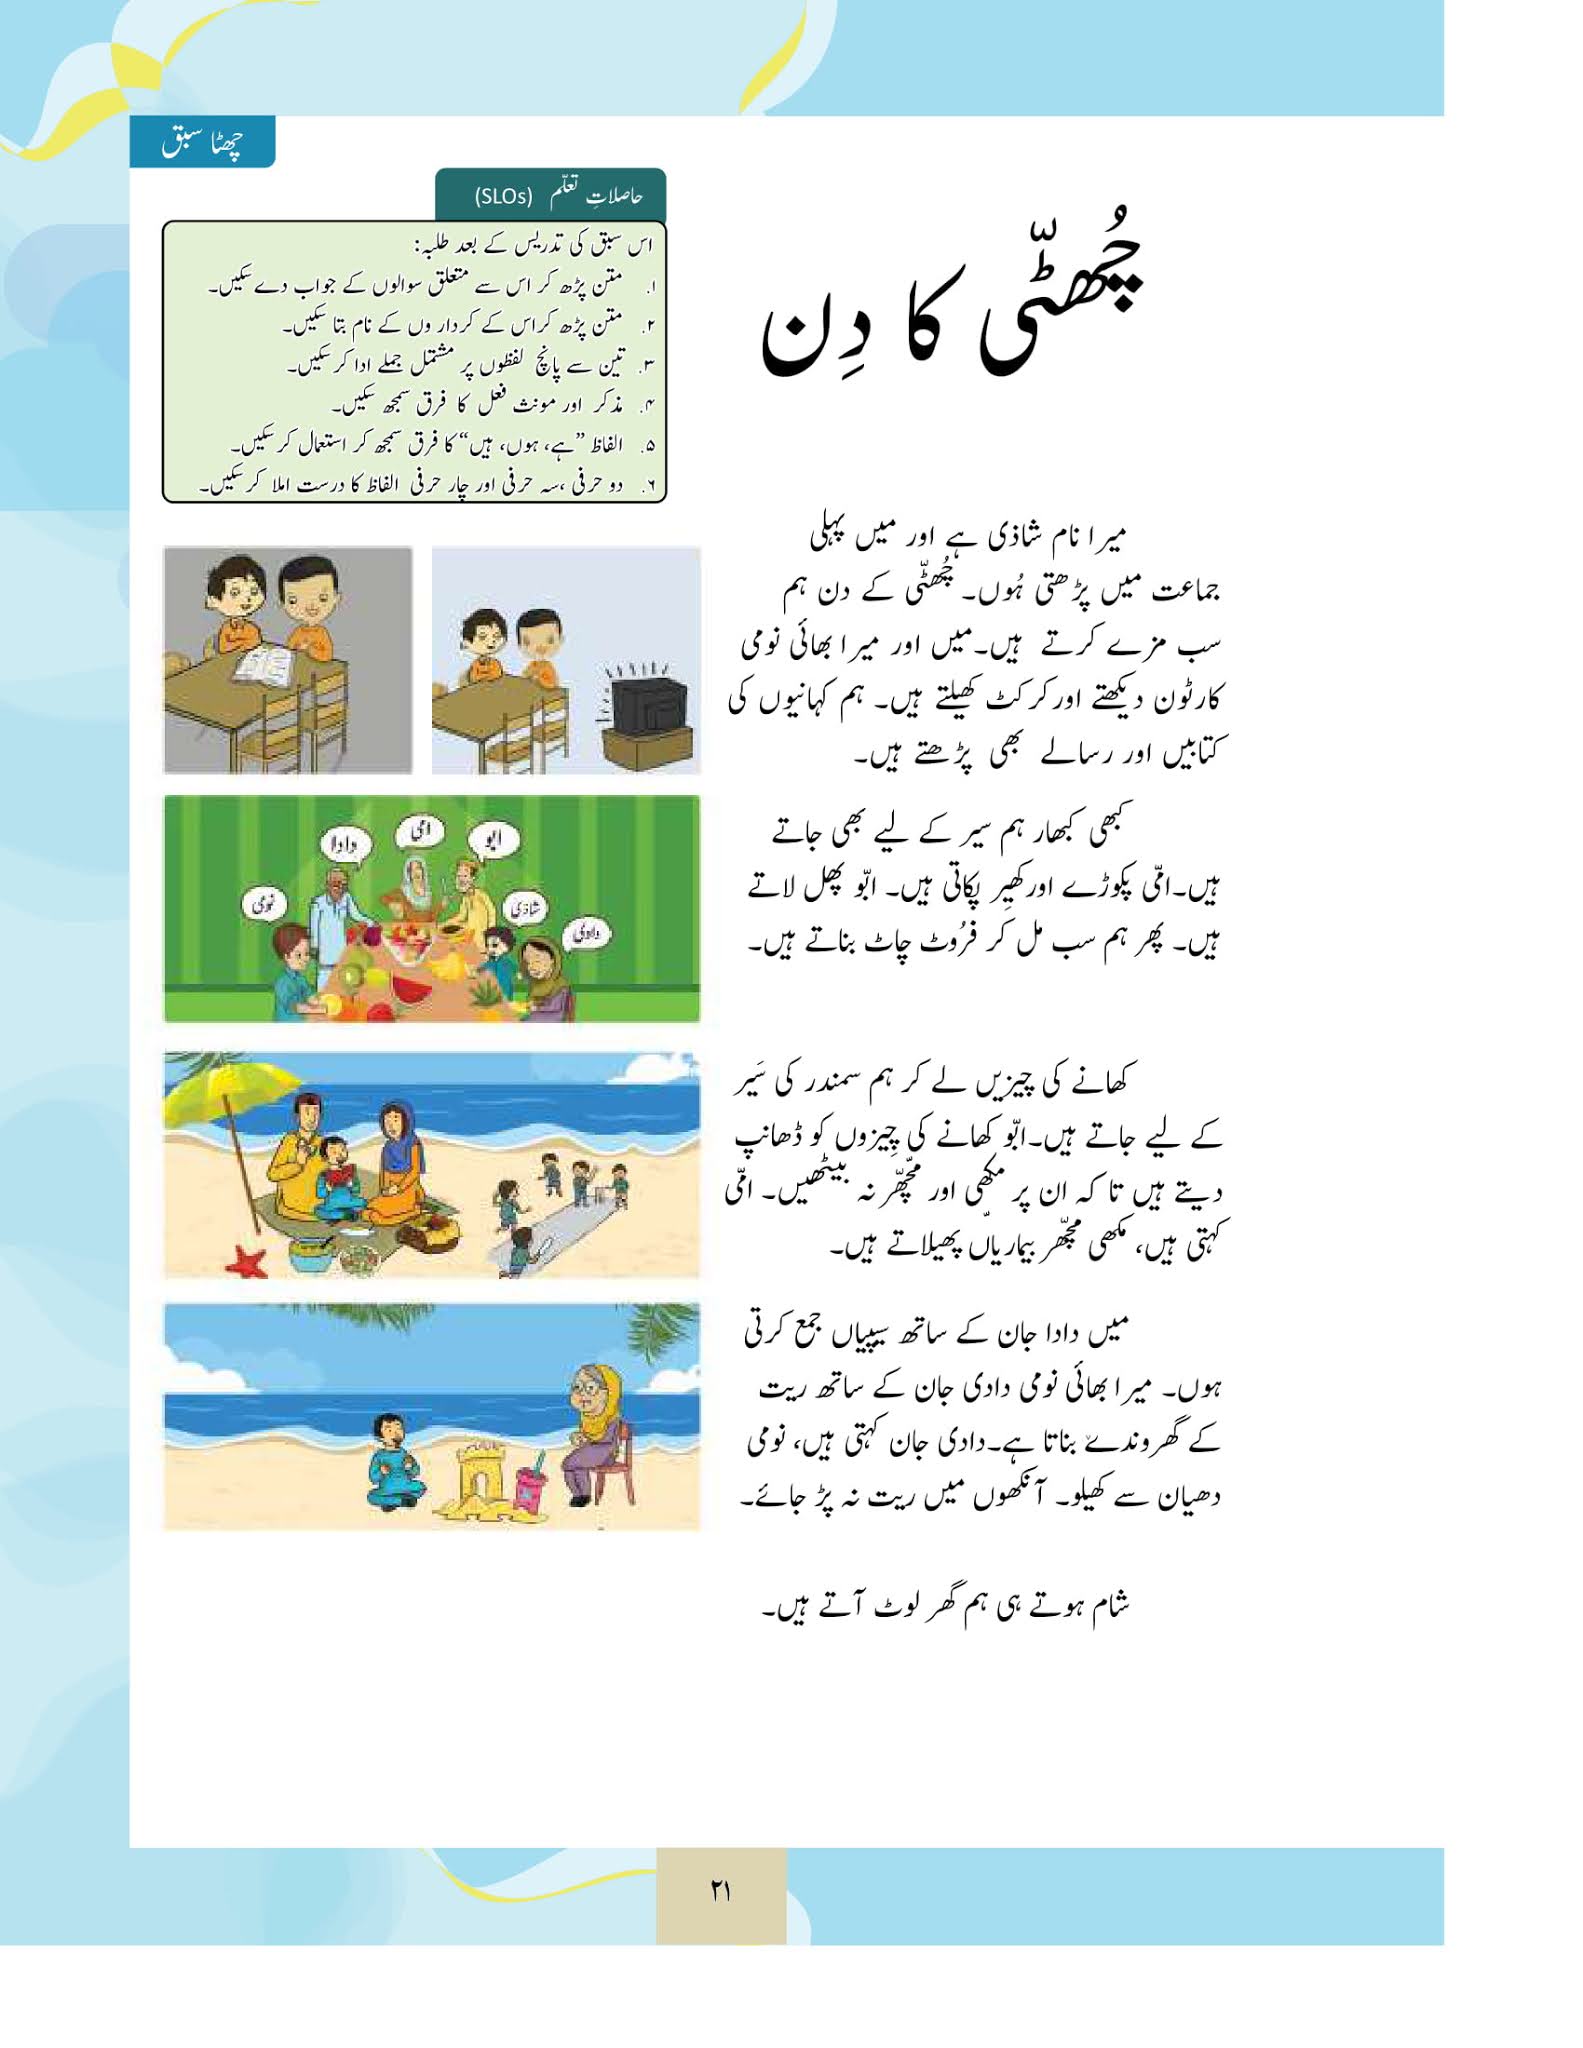 book reading essay in urdu